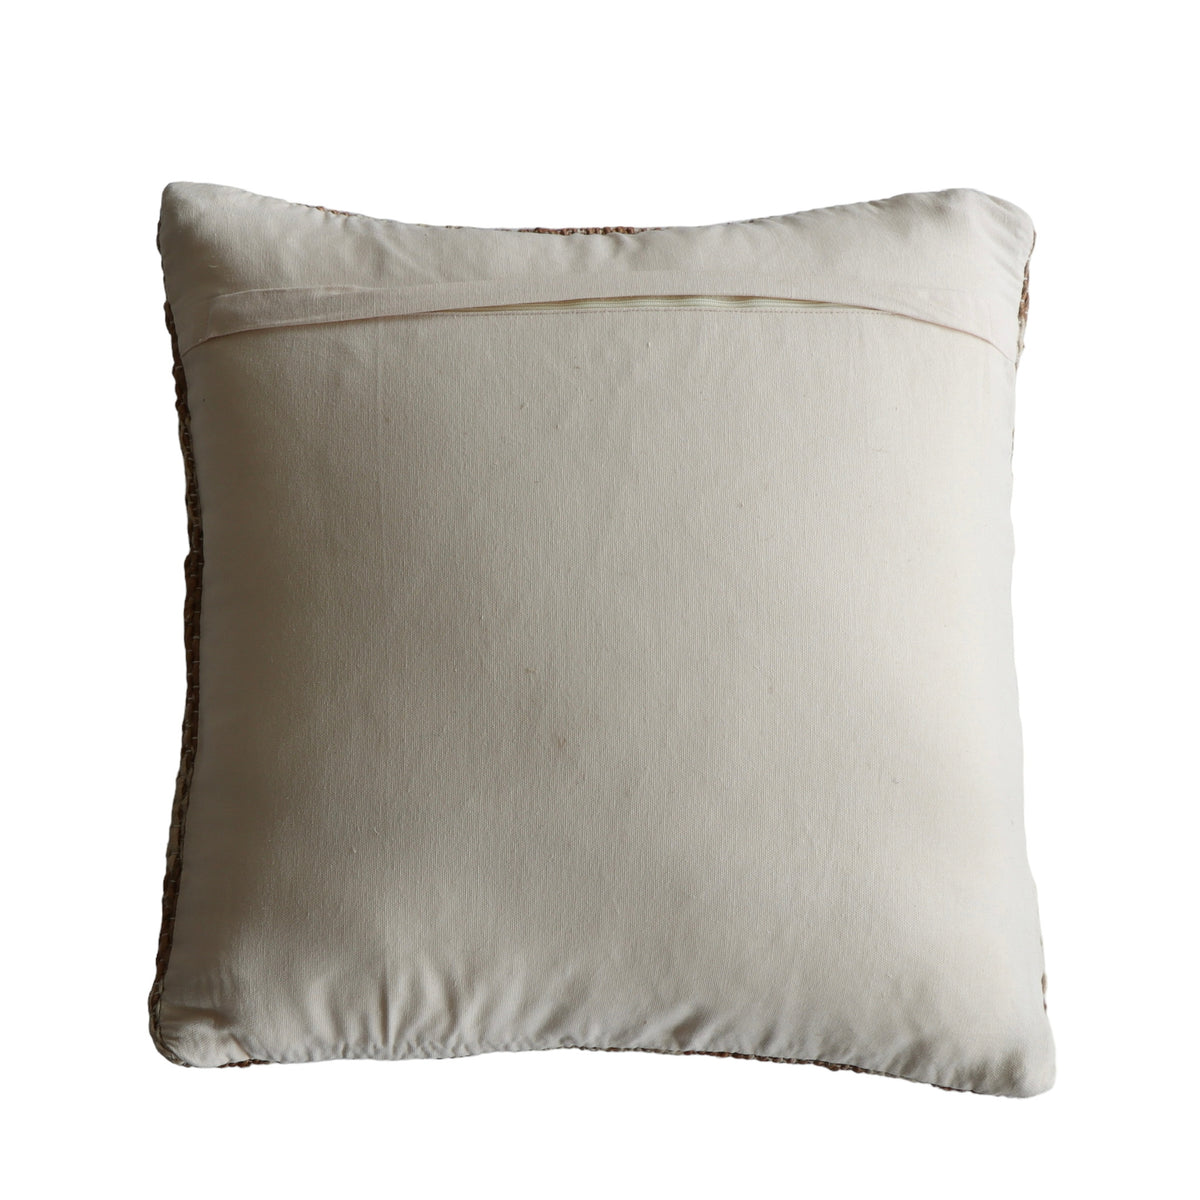 Checkered Jute and Cotton Pillow 20x20 - Café - Holistic Habitat 